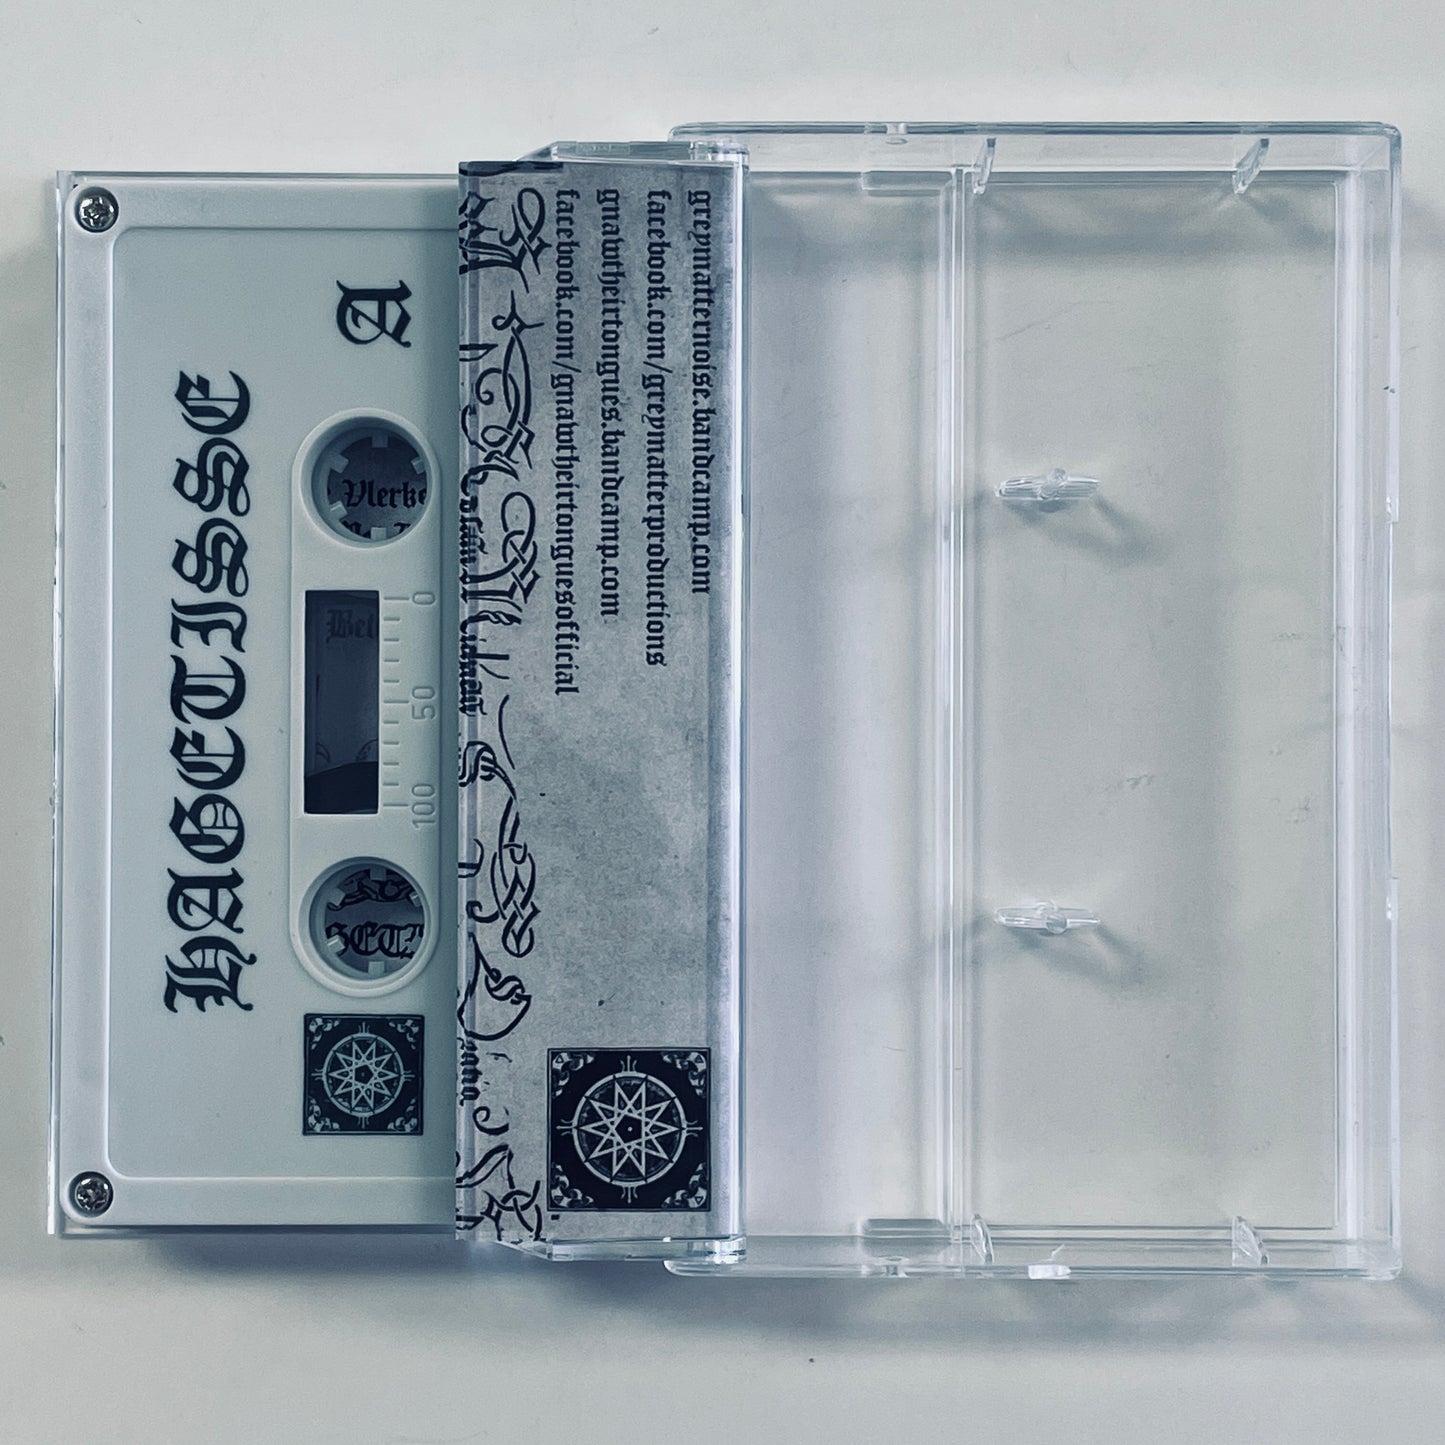 Hagetisse - Godendraak cassette tape (used)